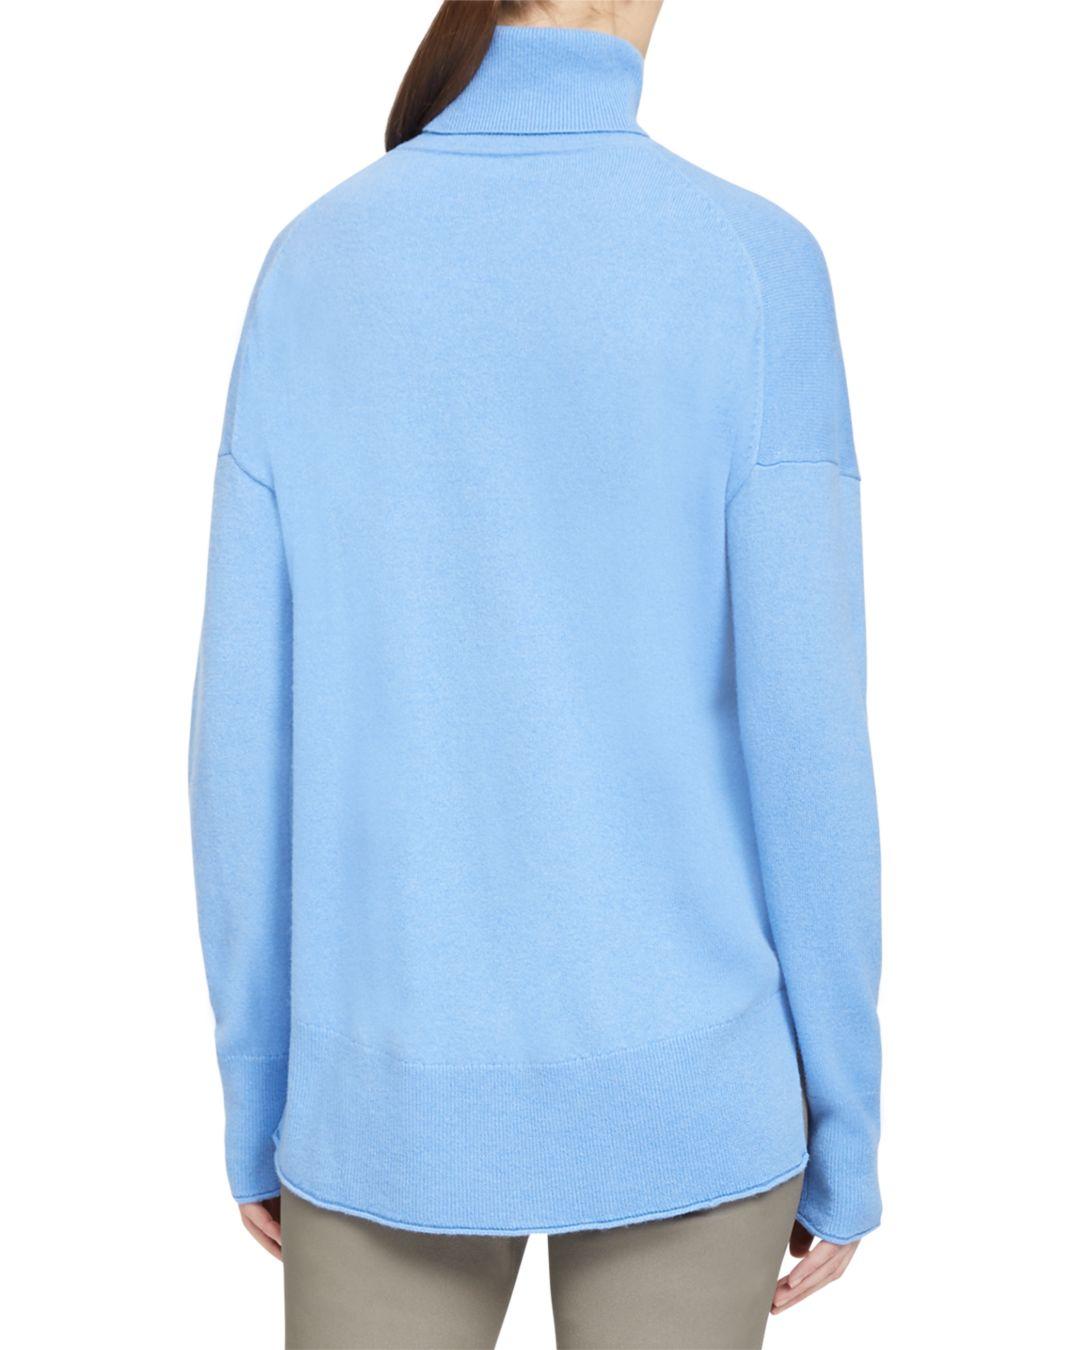 Theory Karenia Cashmere Turtleneck Sweater in Light Azure (Blue) - Lyst